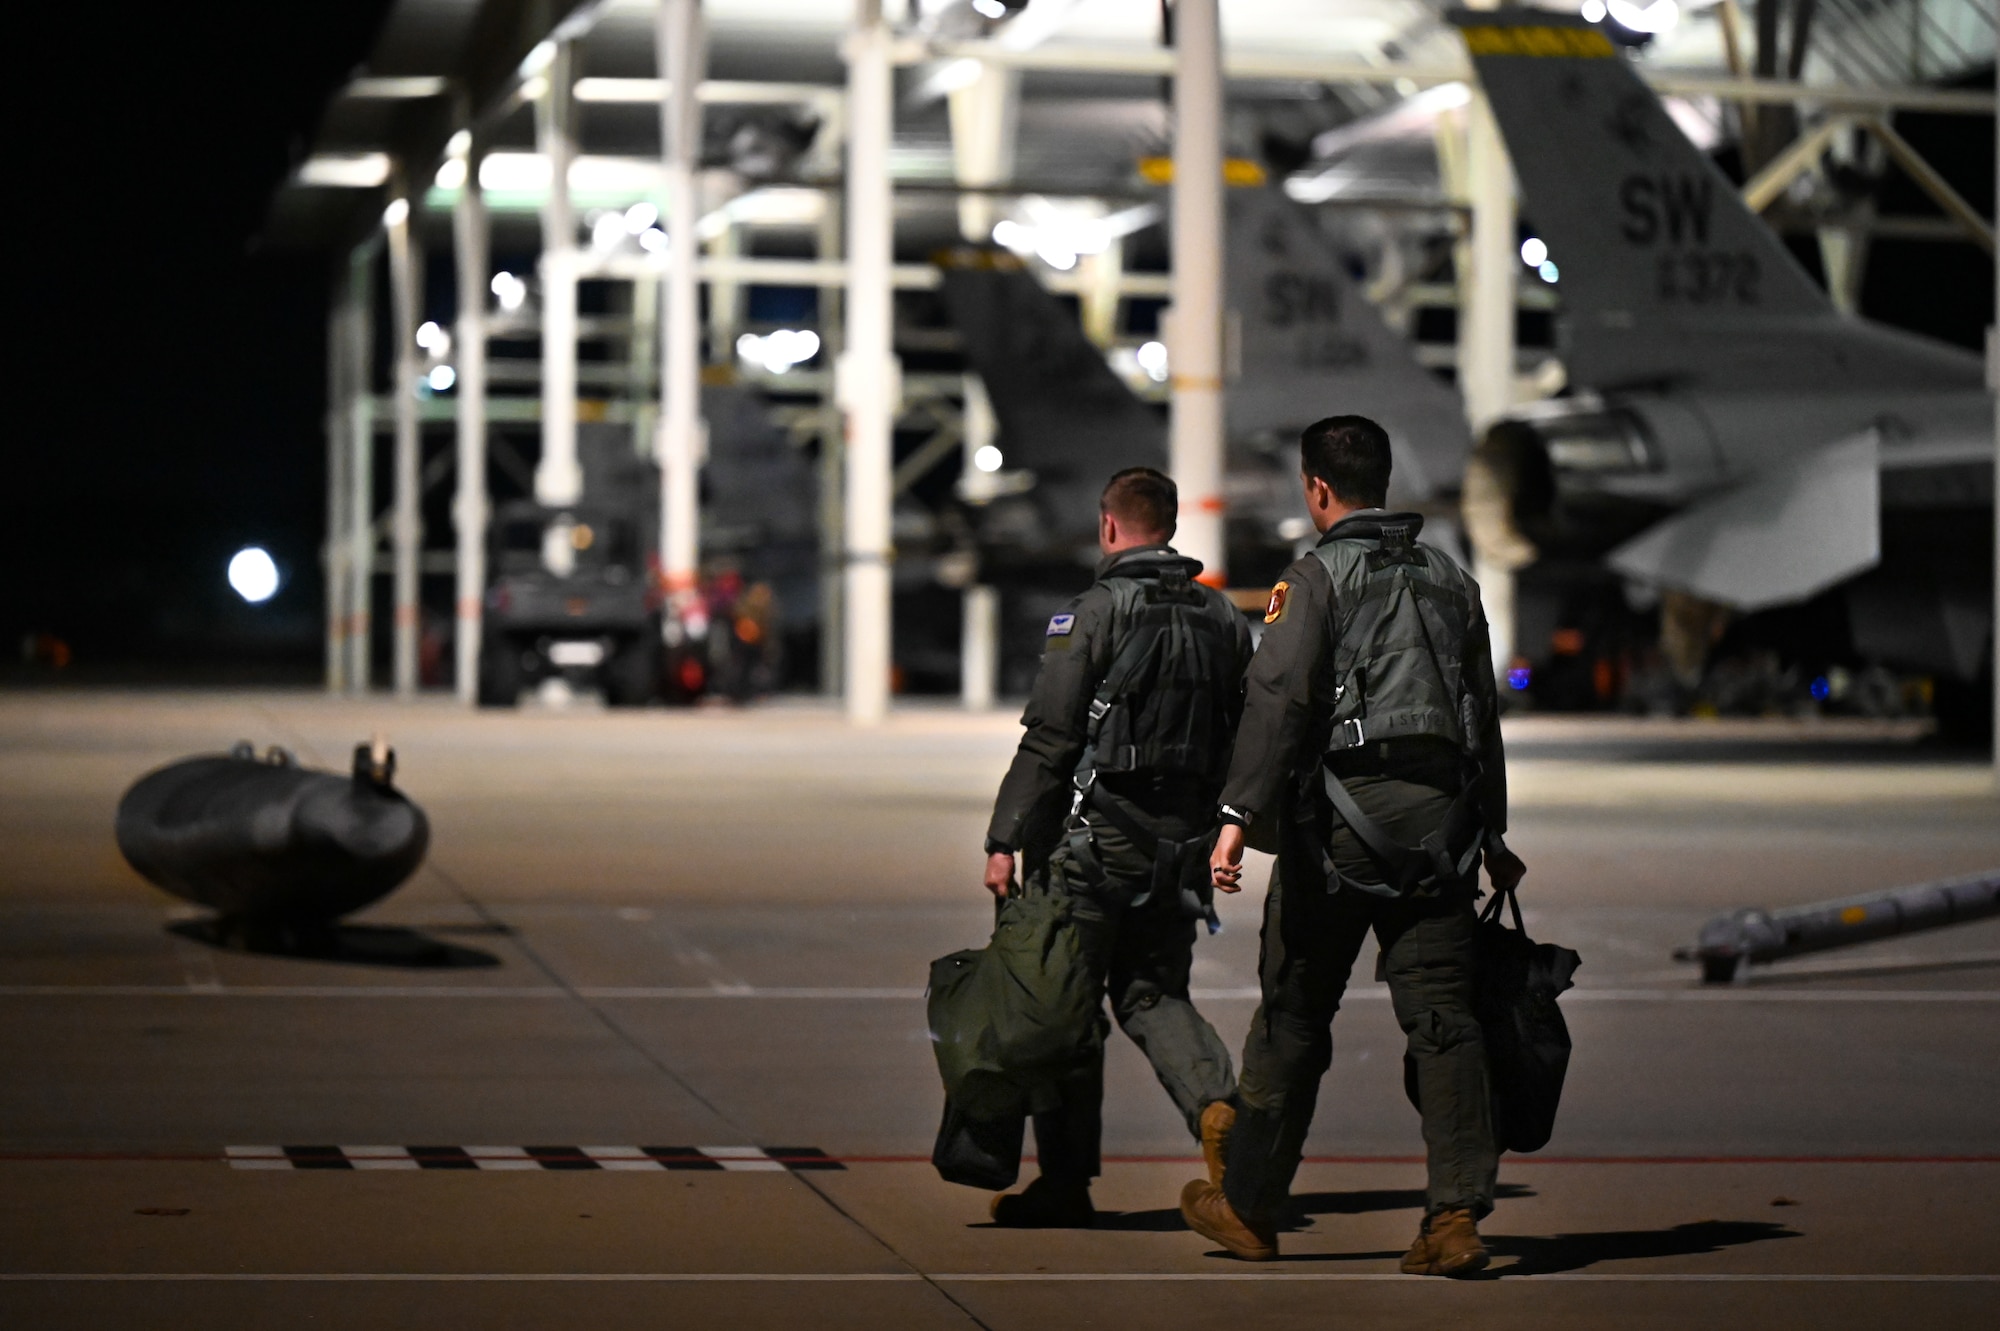 Two pilots walking towards the aircrafts.